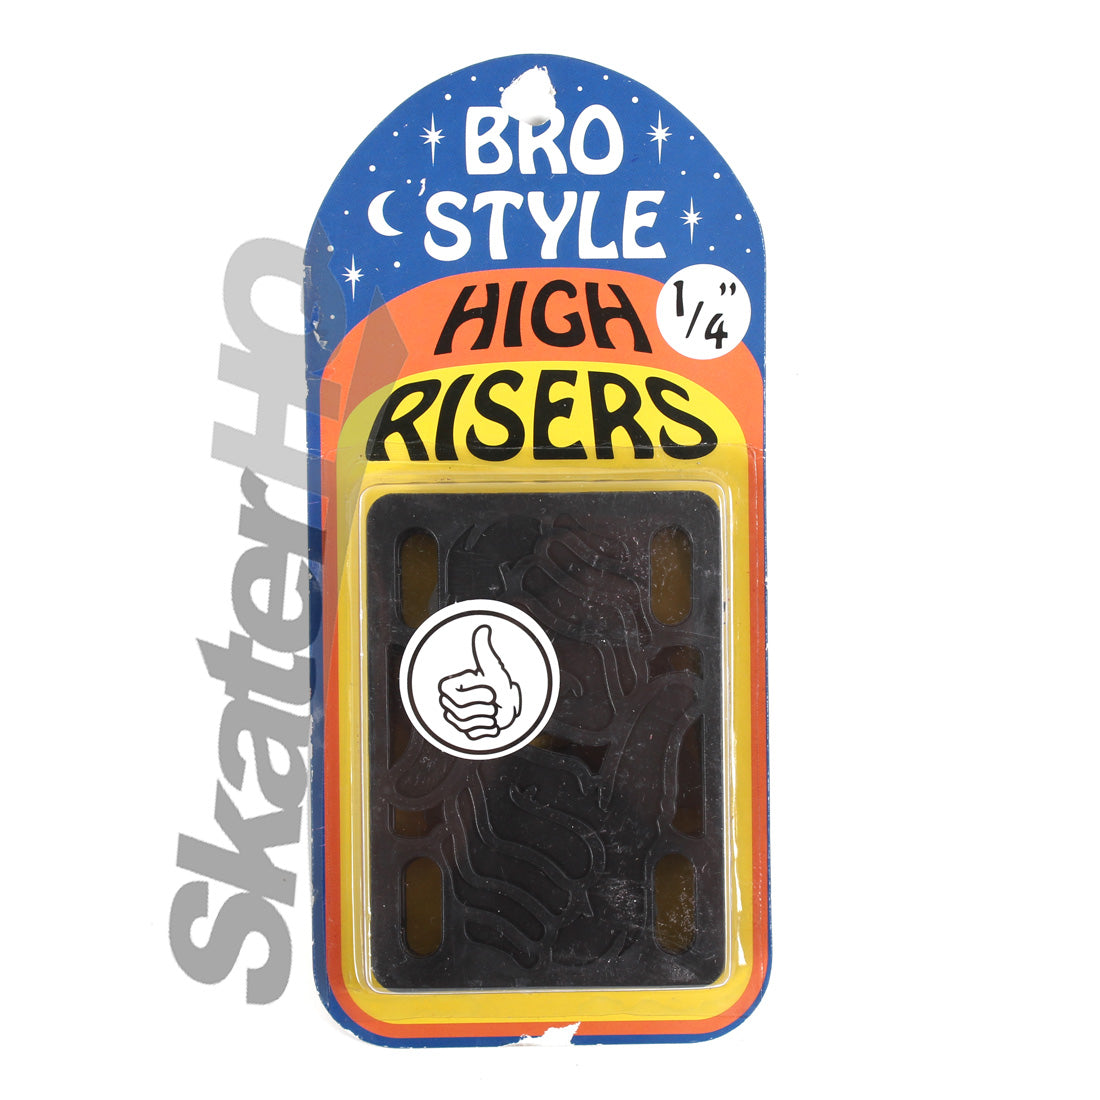 Bro Style 1/4 Hard Risers - Black Skateboard Hardware and Parts